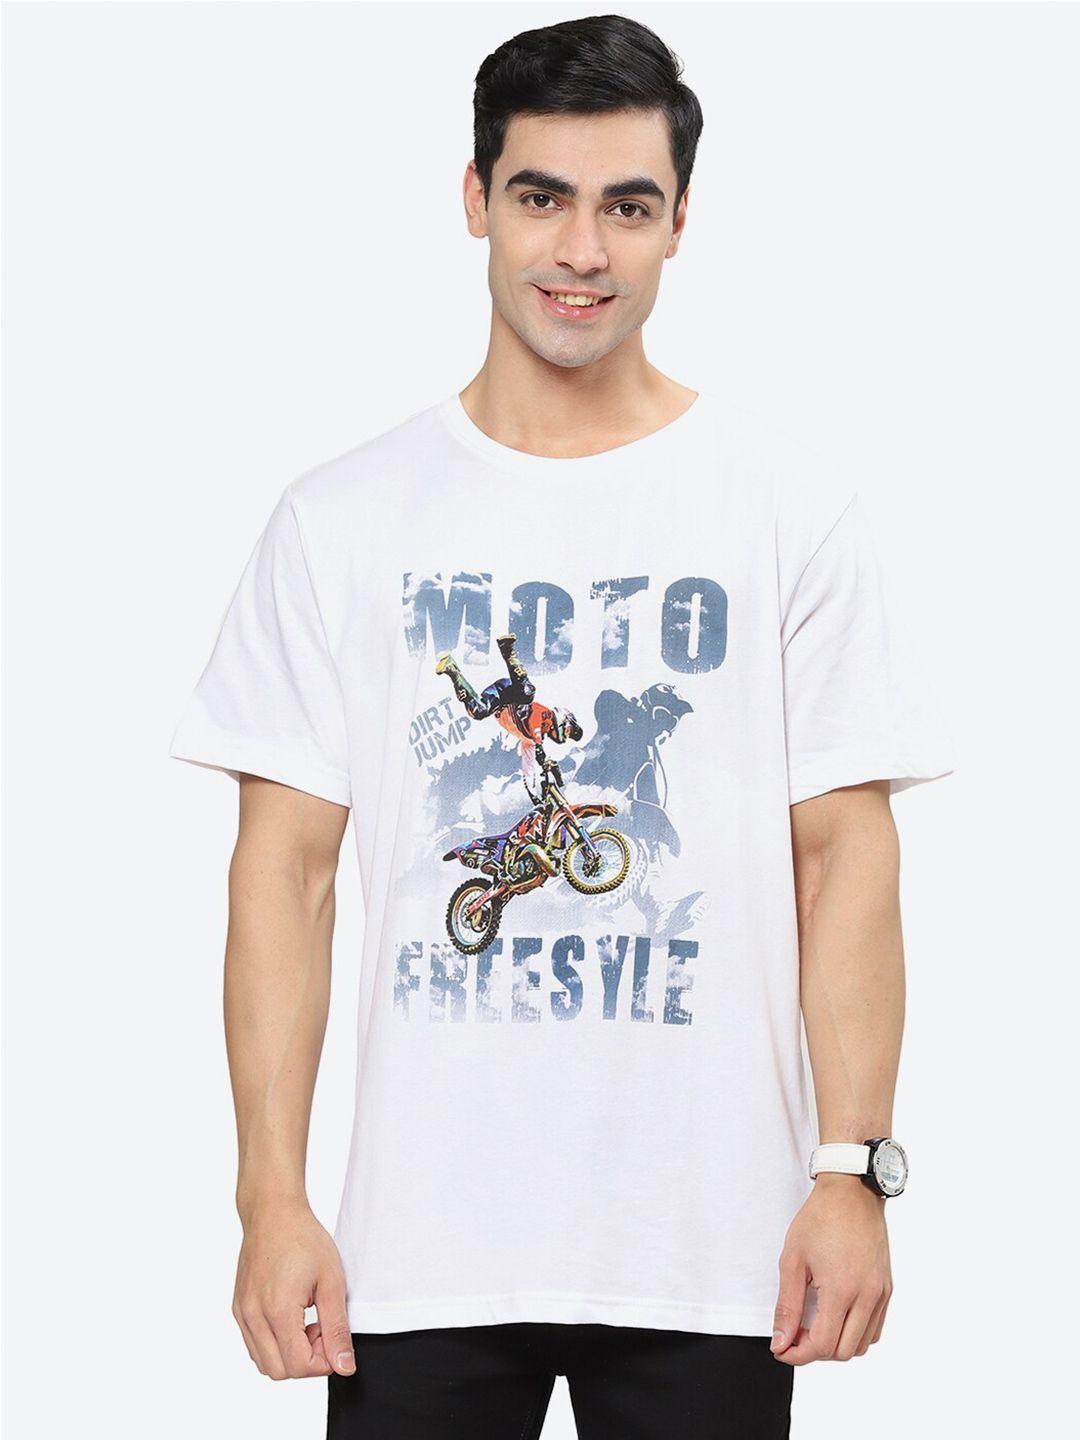 2bme biker printed round neck short sleeves pure cotton t-shirt